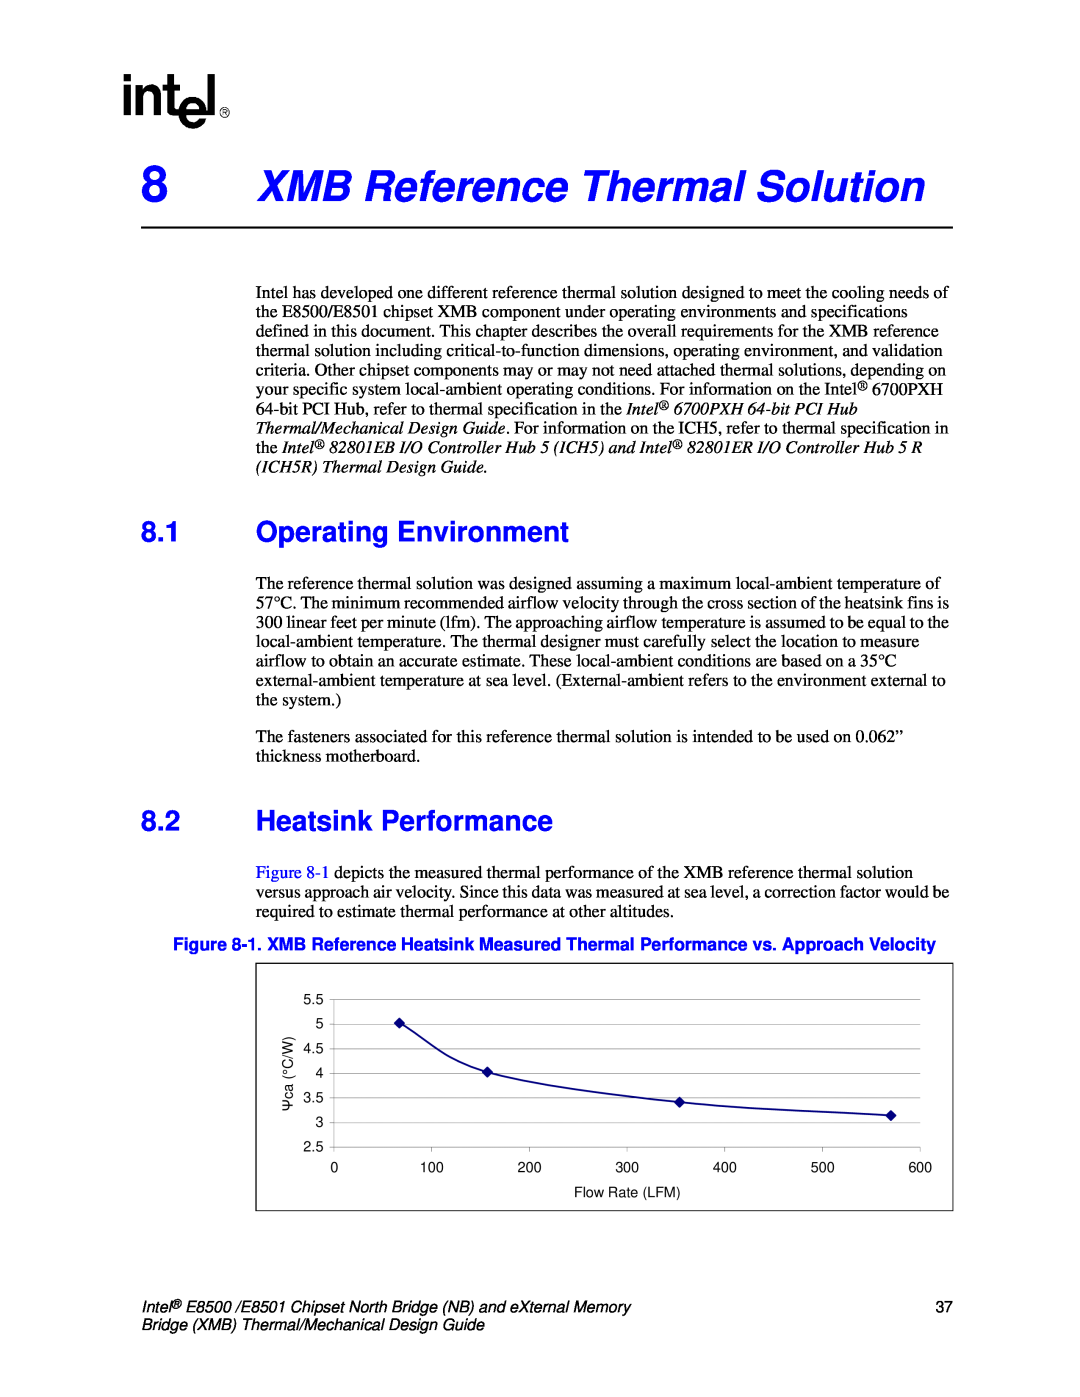 Intel E8501 manual 8XMB Reference Thermal Solution, 8.1Operating Environment, 8.2Heatsink Performance 